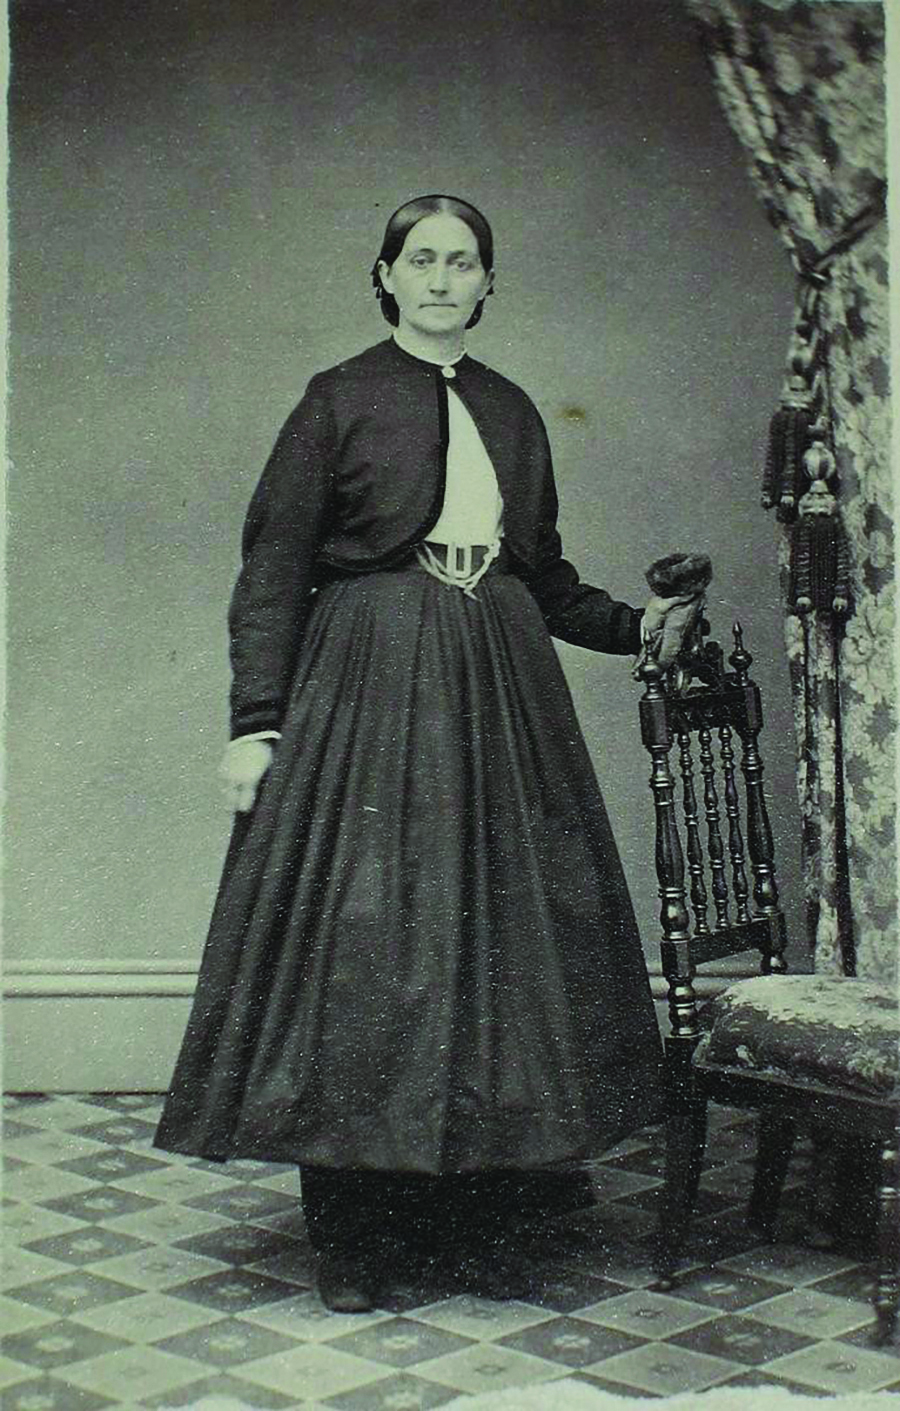 Phoebe Lamson, pioneer Adventist physician and educator